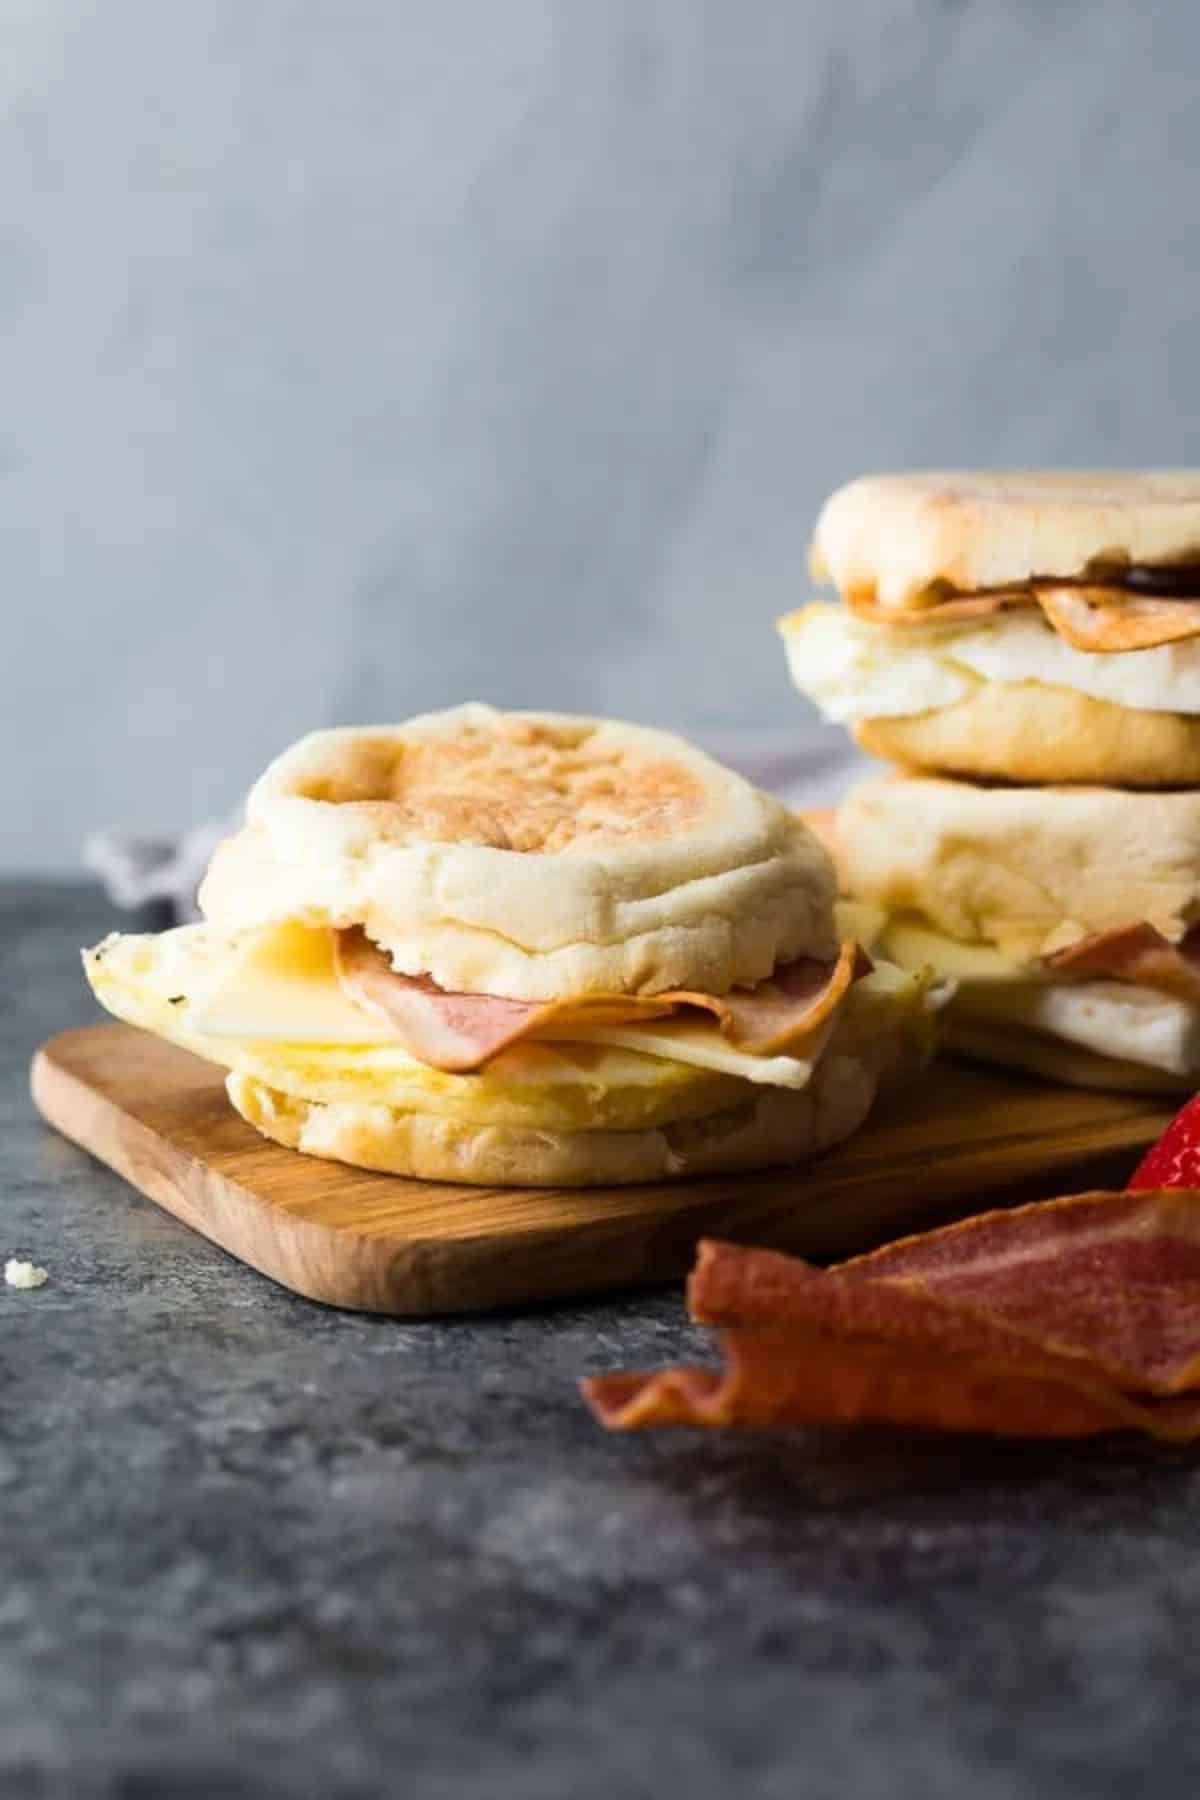 Tasty copycat starbucks egg white breakfast sandwiches on a wooden cutting board.